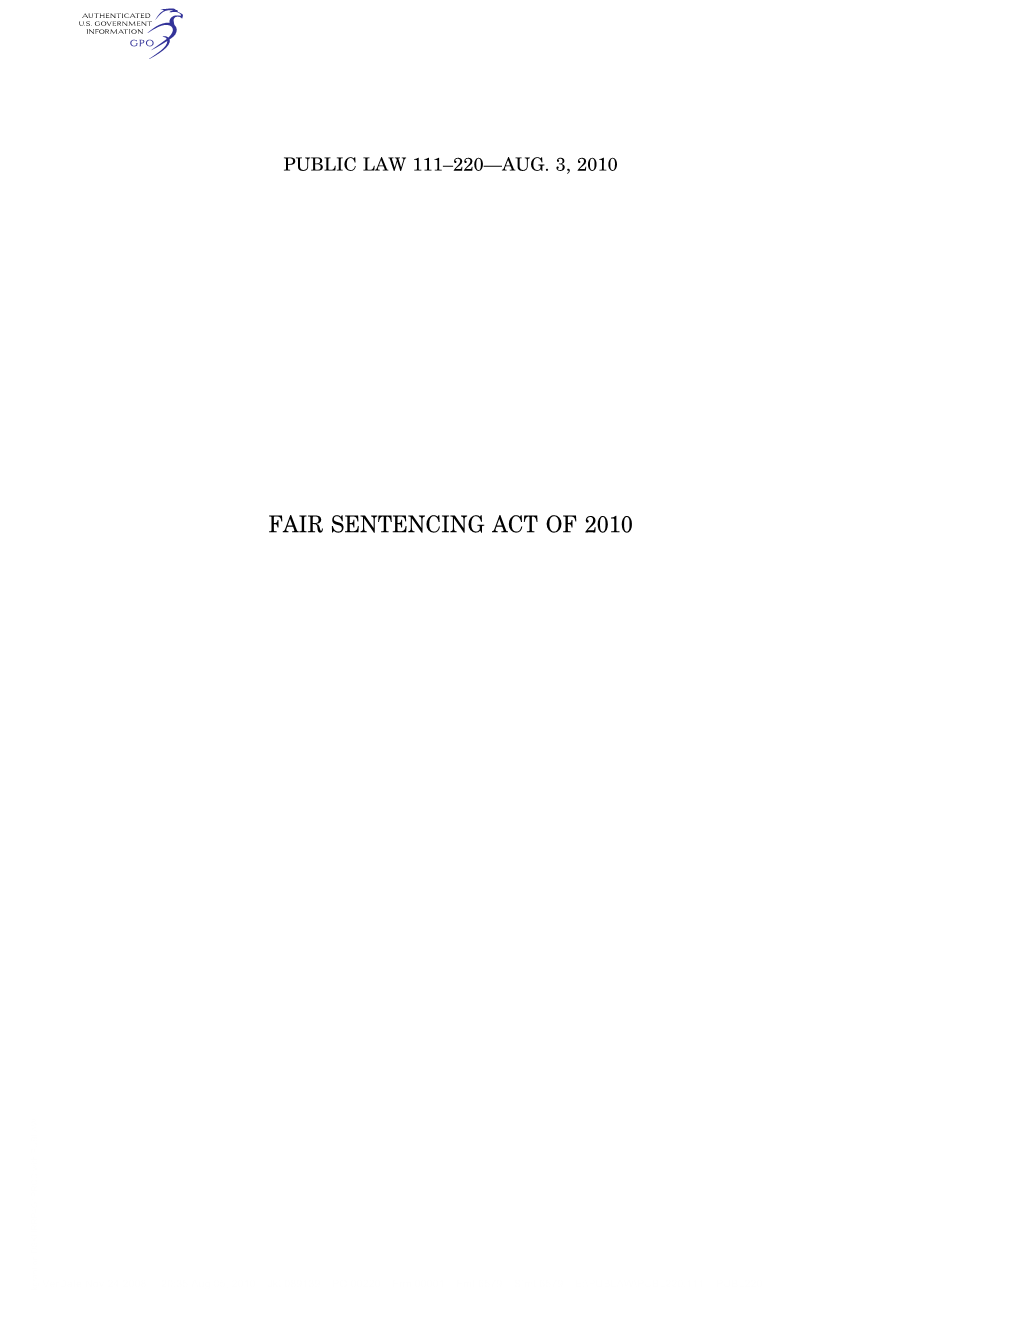 Fair Sentencing Act of 2010